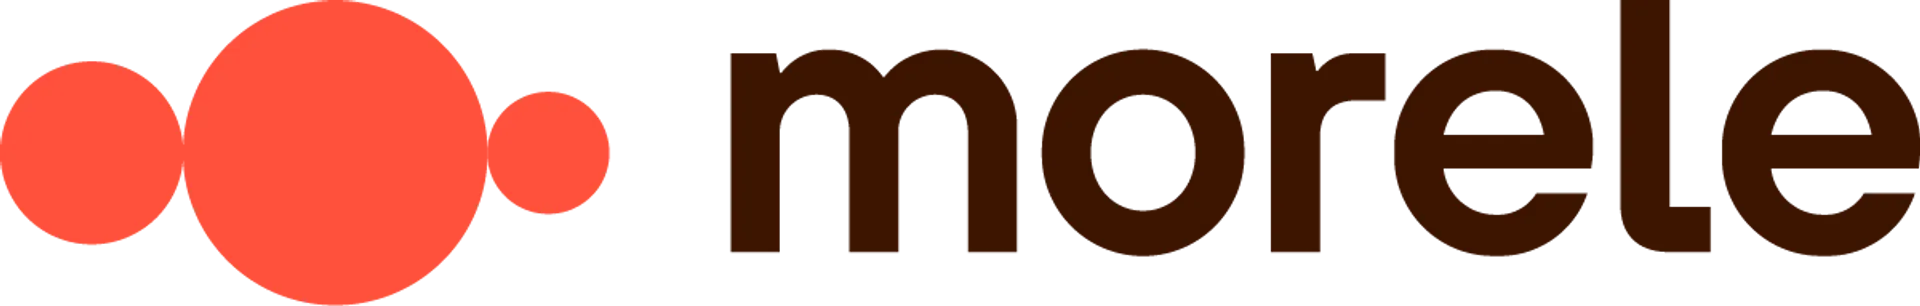 MORELE.NET logo